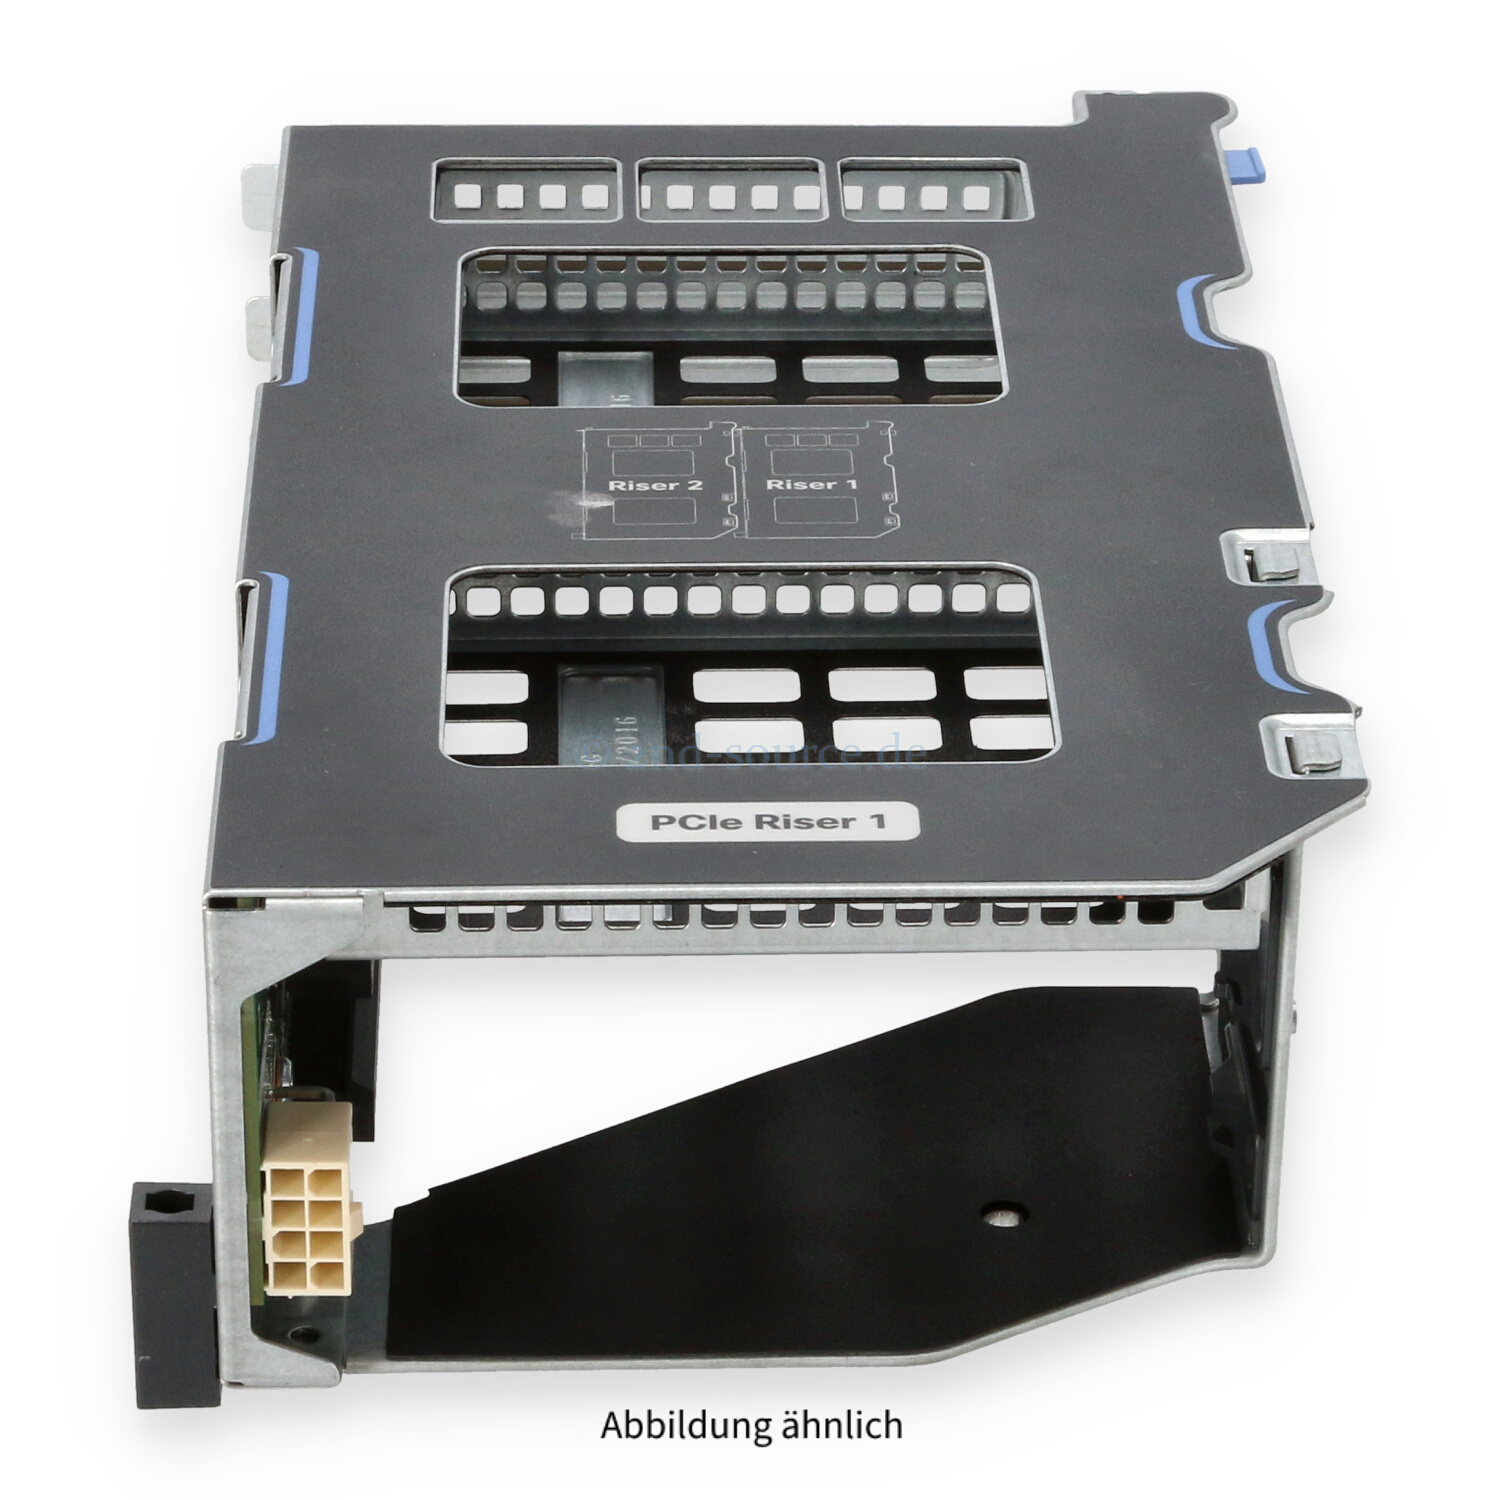 Cisco PCI Express Primary Riser Kit UCS C240 M4 UCSC-PCI-1C-240M4 74-13091-02